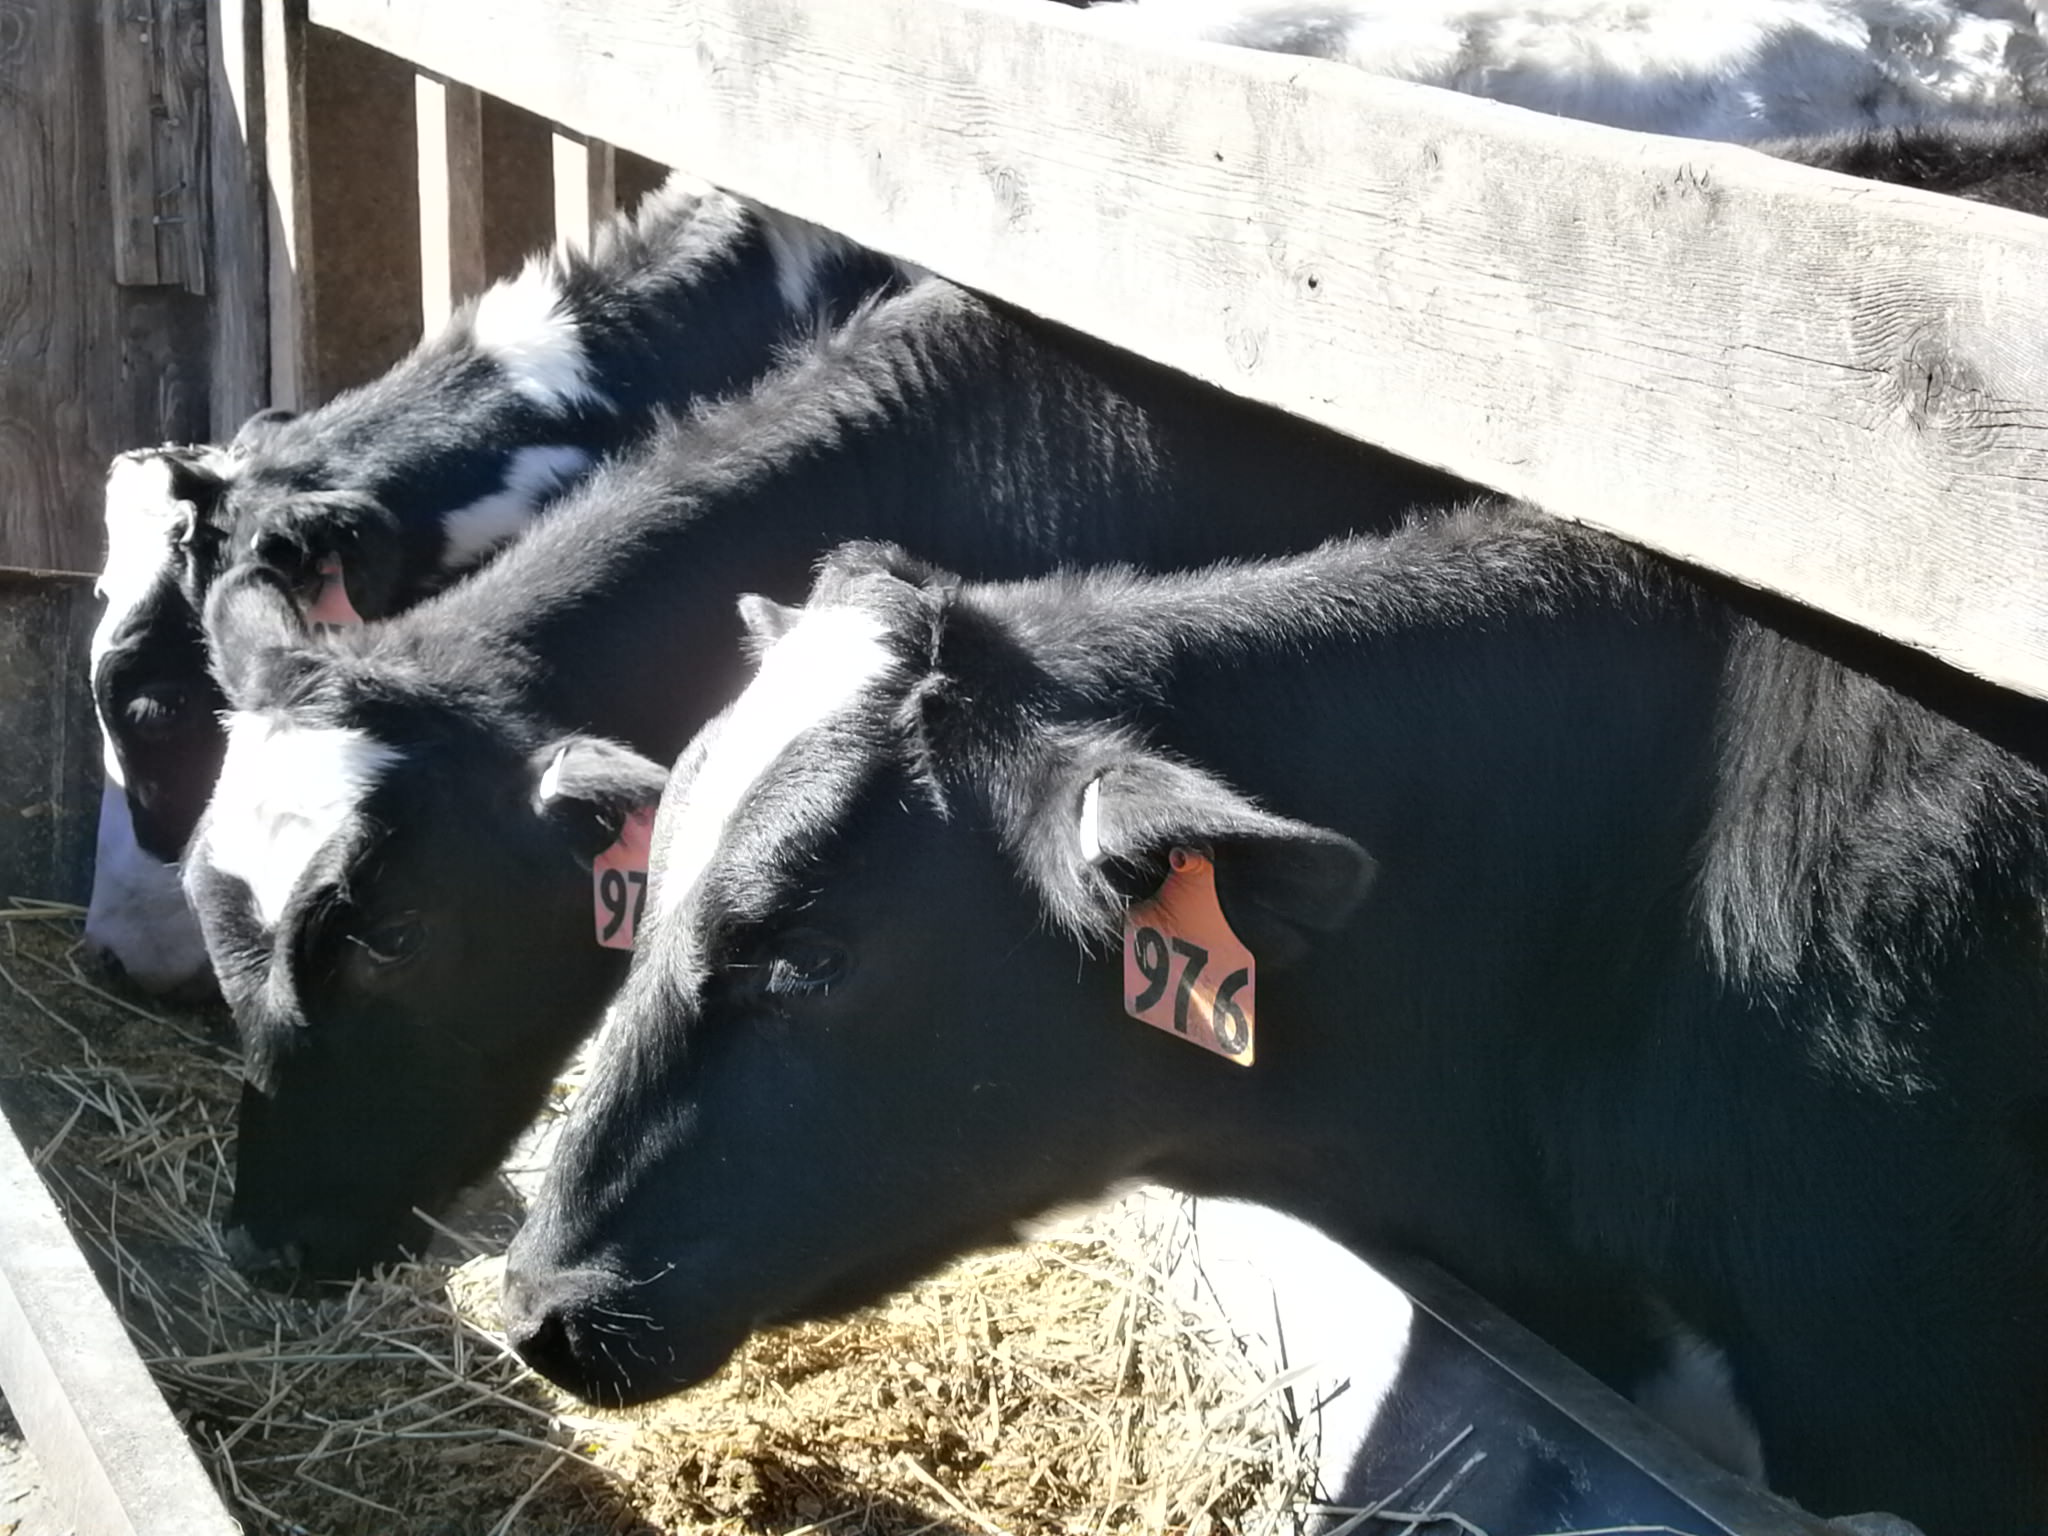 Fulper Farm cows; photo credit Lynne Goldman